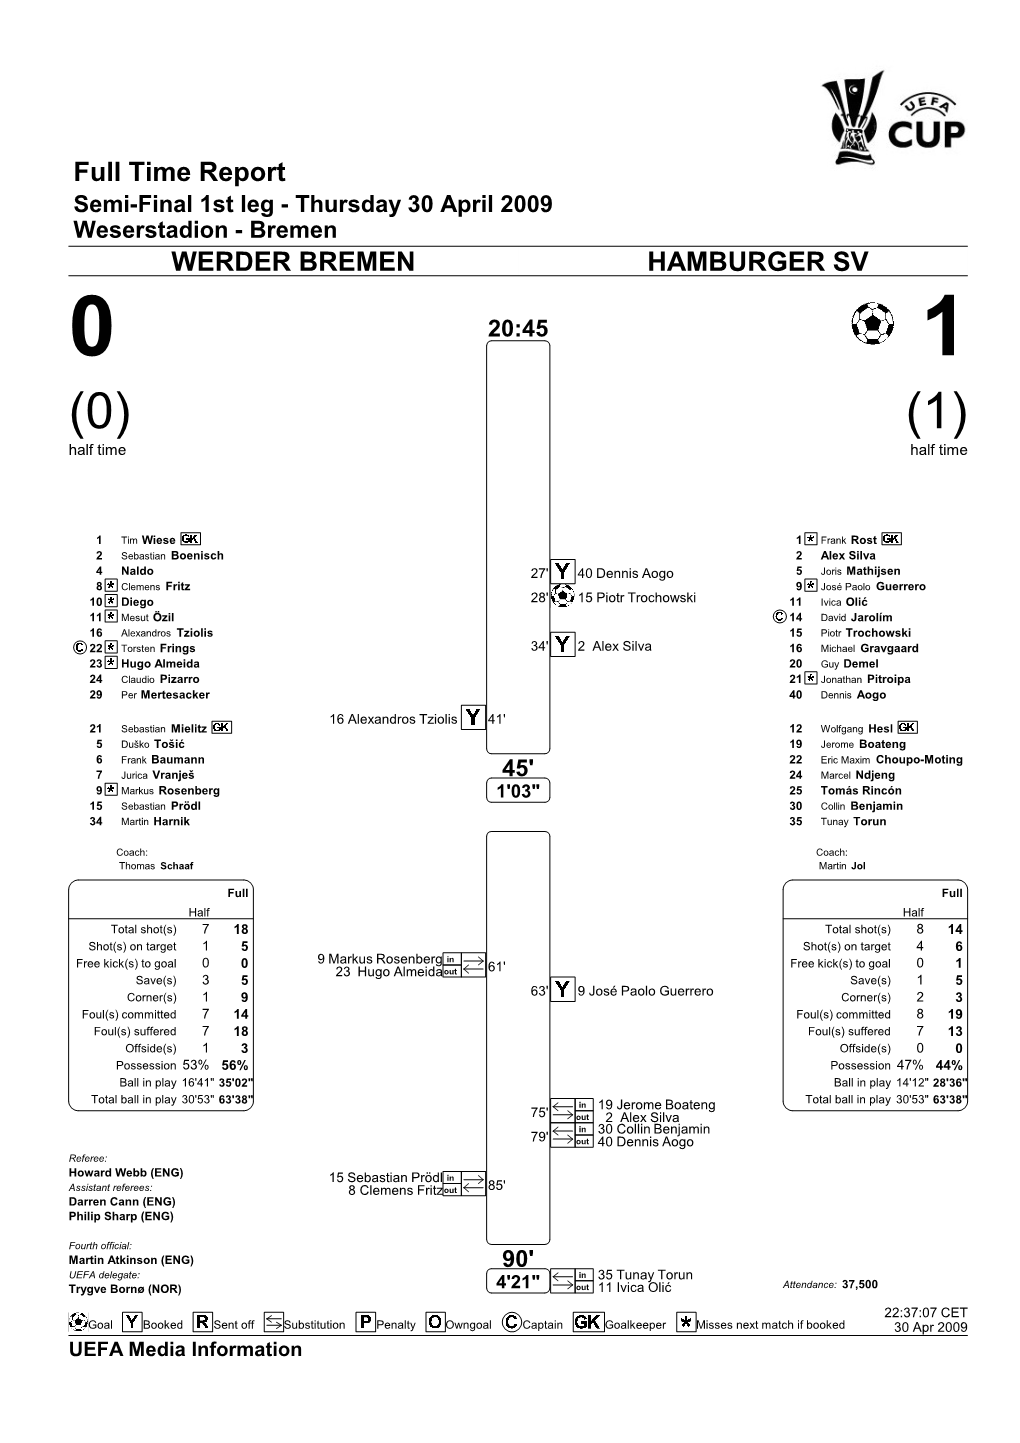 Full Time Report WERDER BREMEN HAMBURGER SV